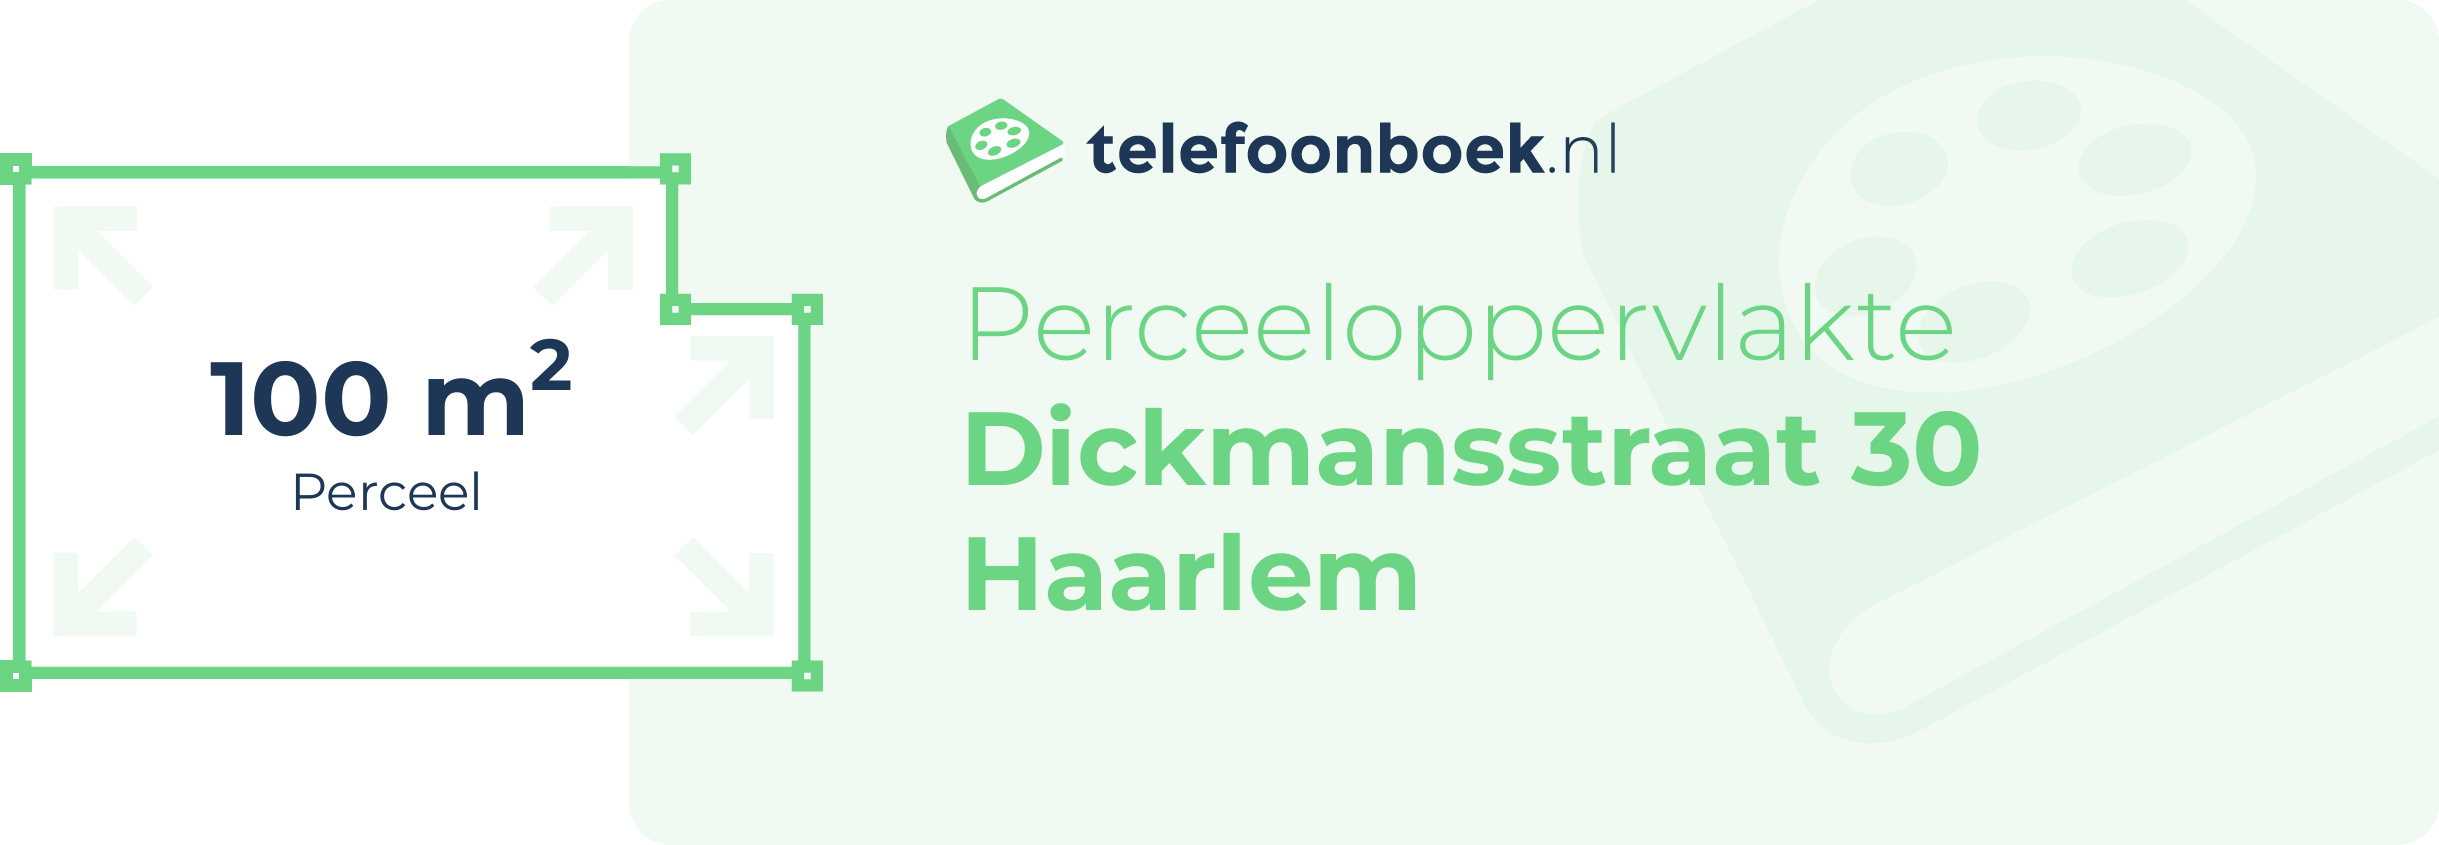 Perceeloppervlakte Dickmansstraat 30 Haarlem